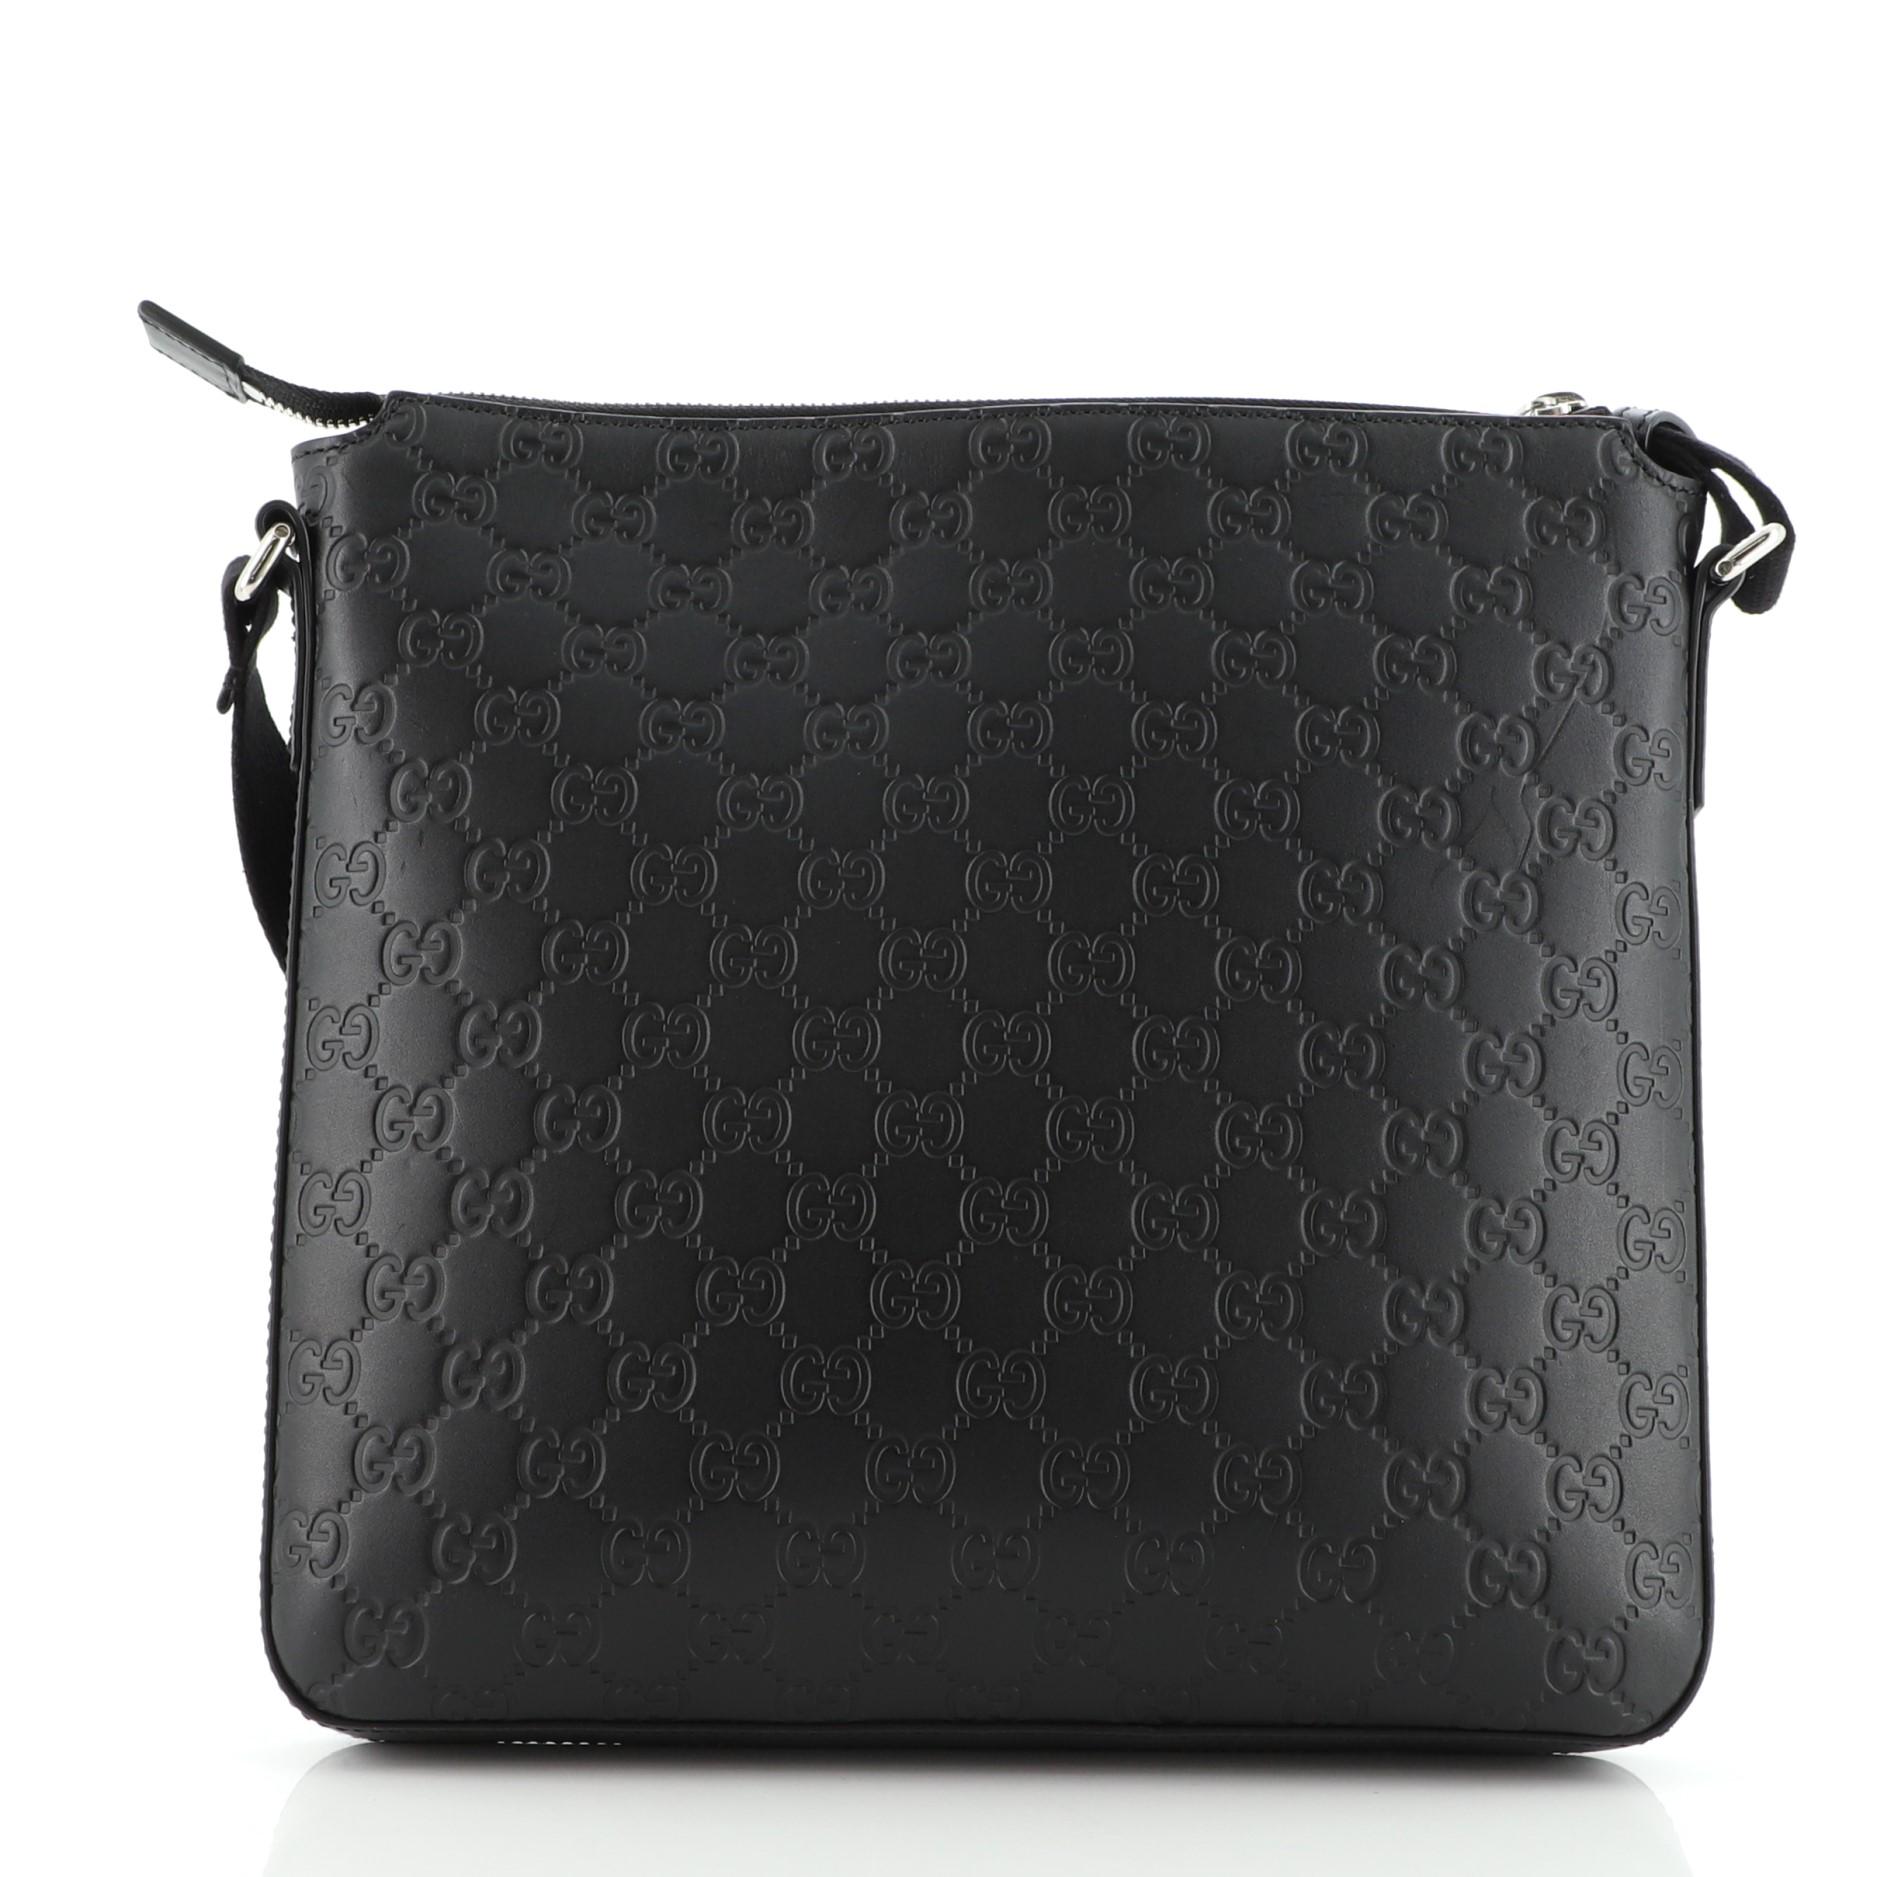 Black Gucci Signature Zip Messenger Bag Guccissima Leather Medium